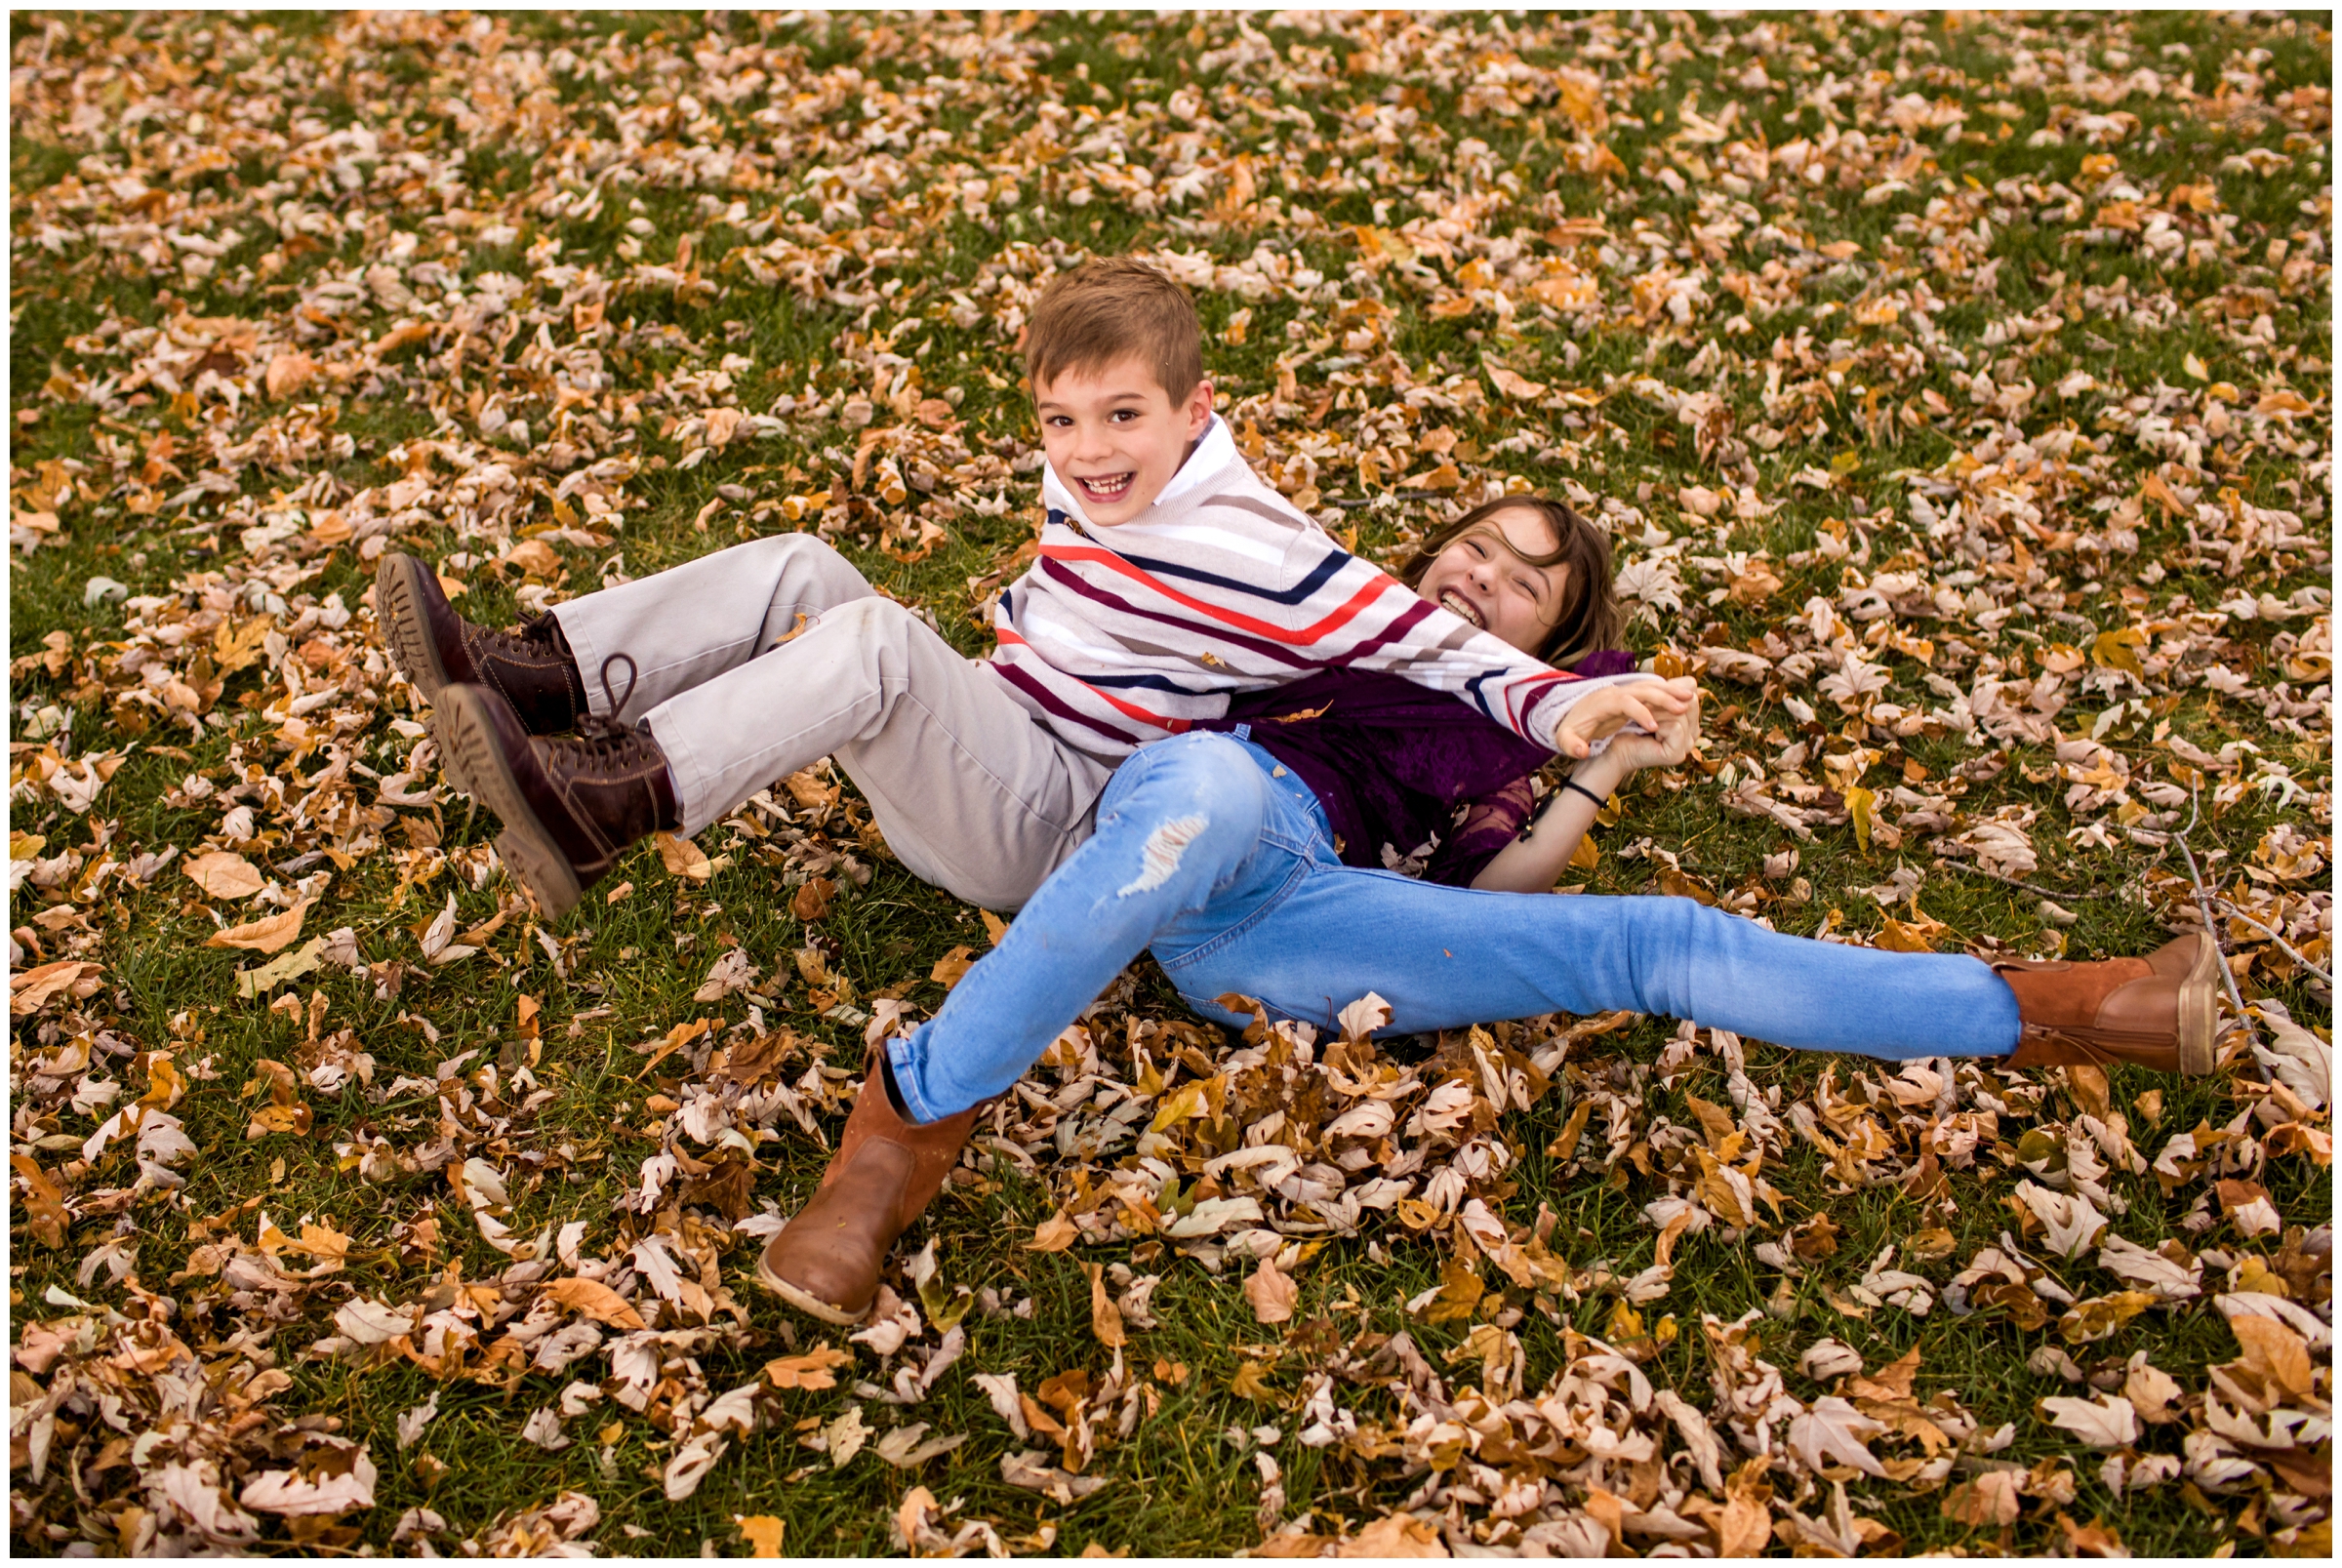 siblings wrestling in leaves at Lavern m johnson park Colorado 